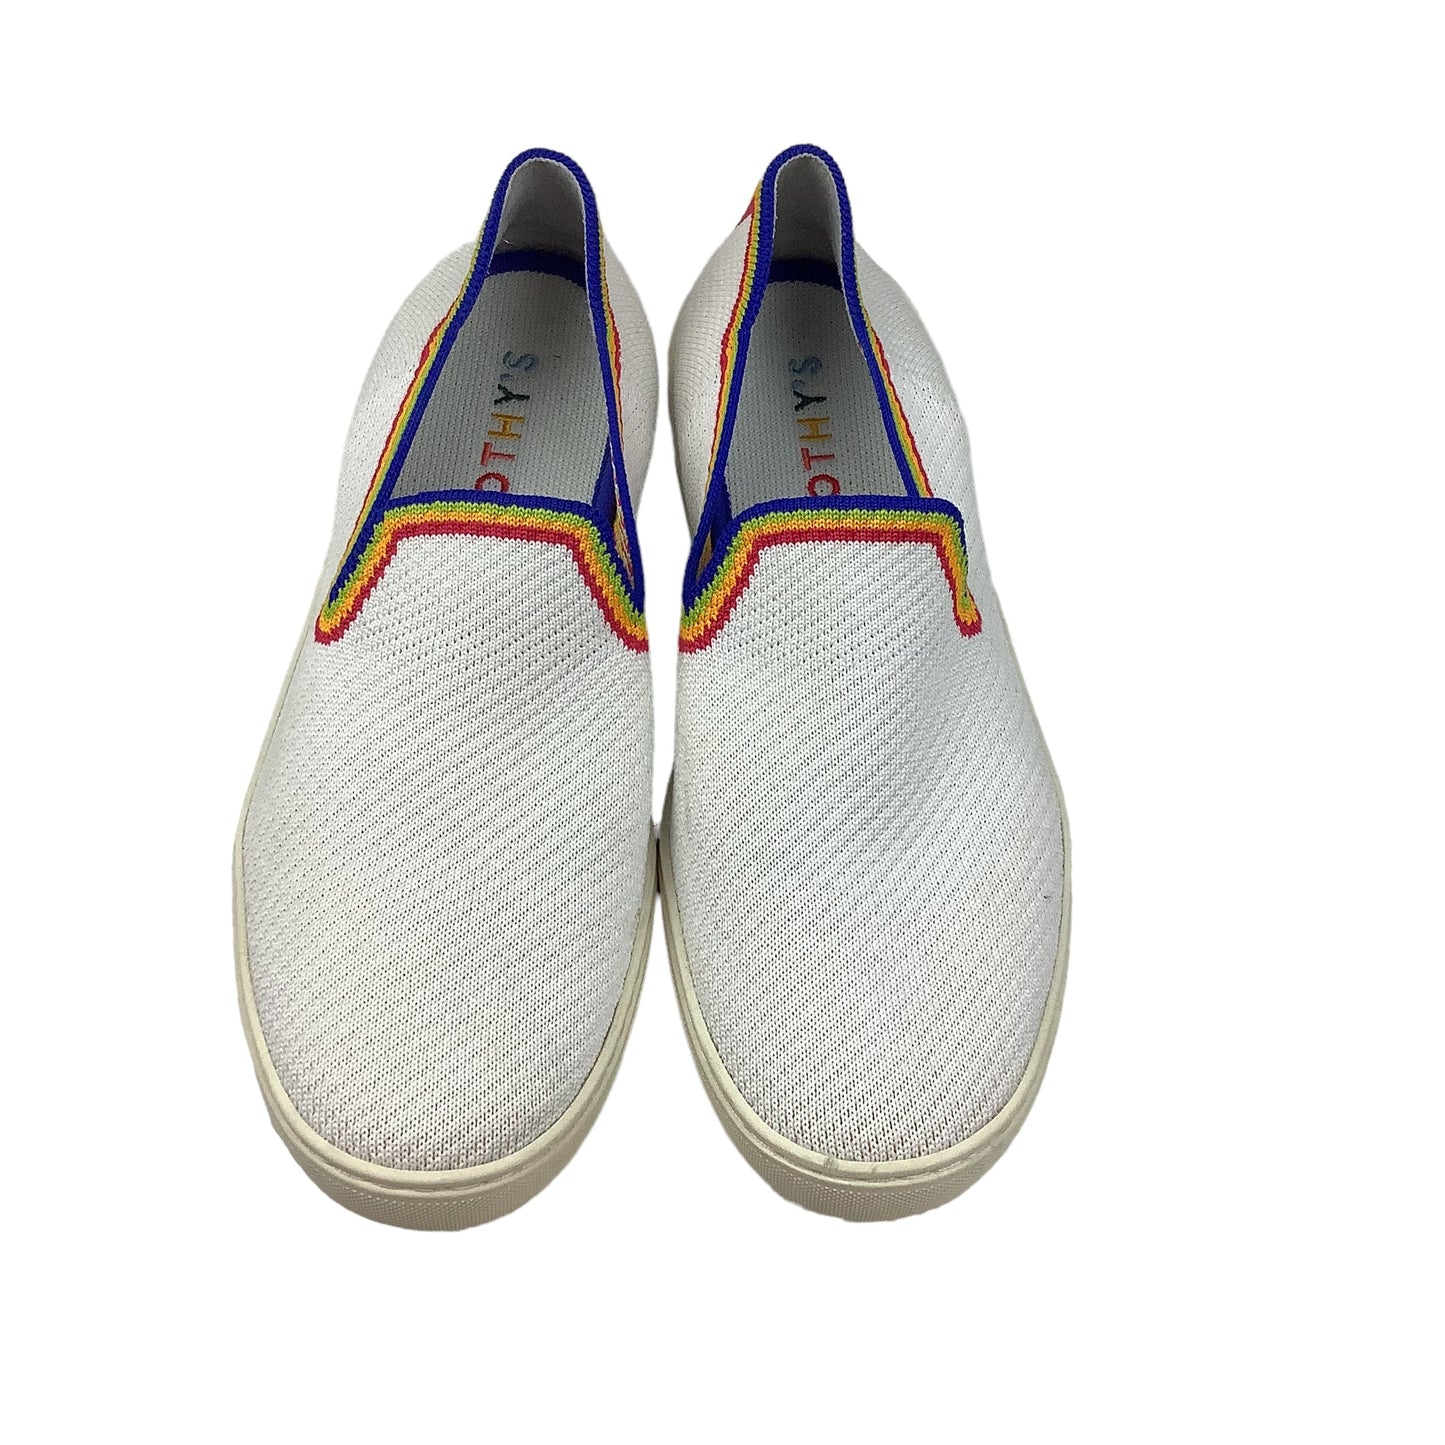 White Shoes Designer Rothys, Size 9.5